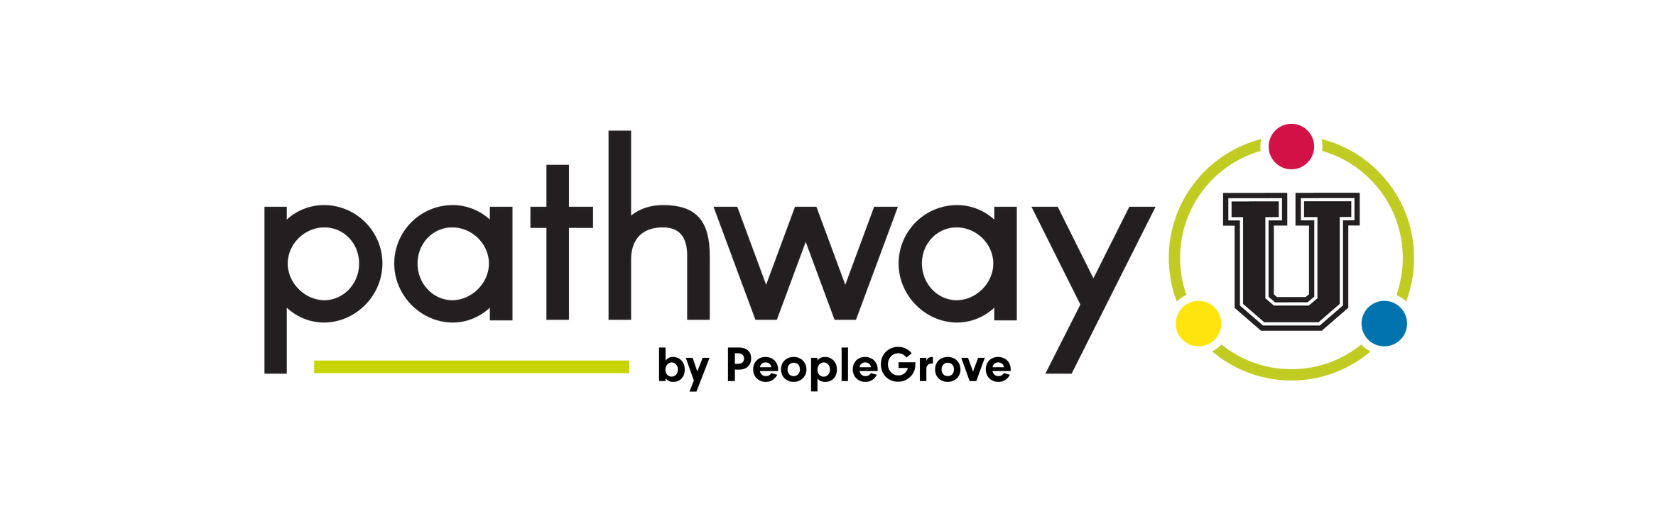 PathwayU by PeopleGrove